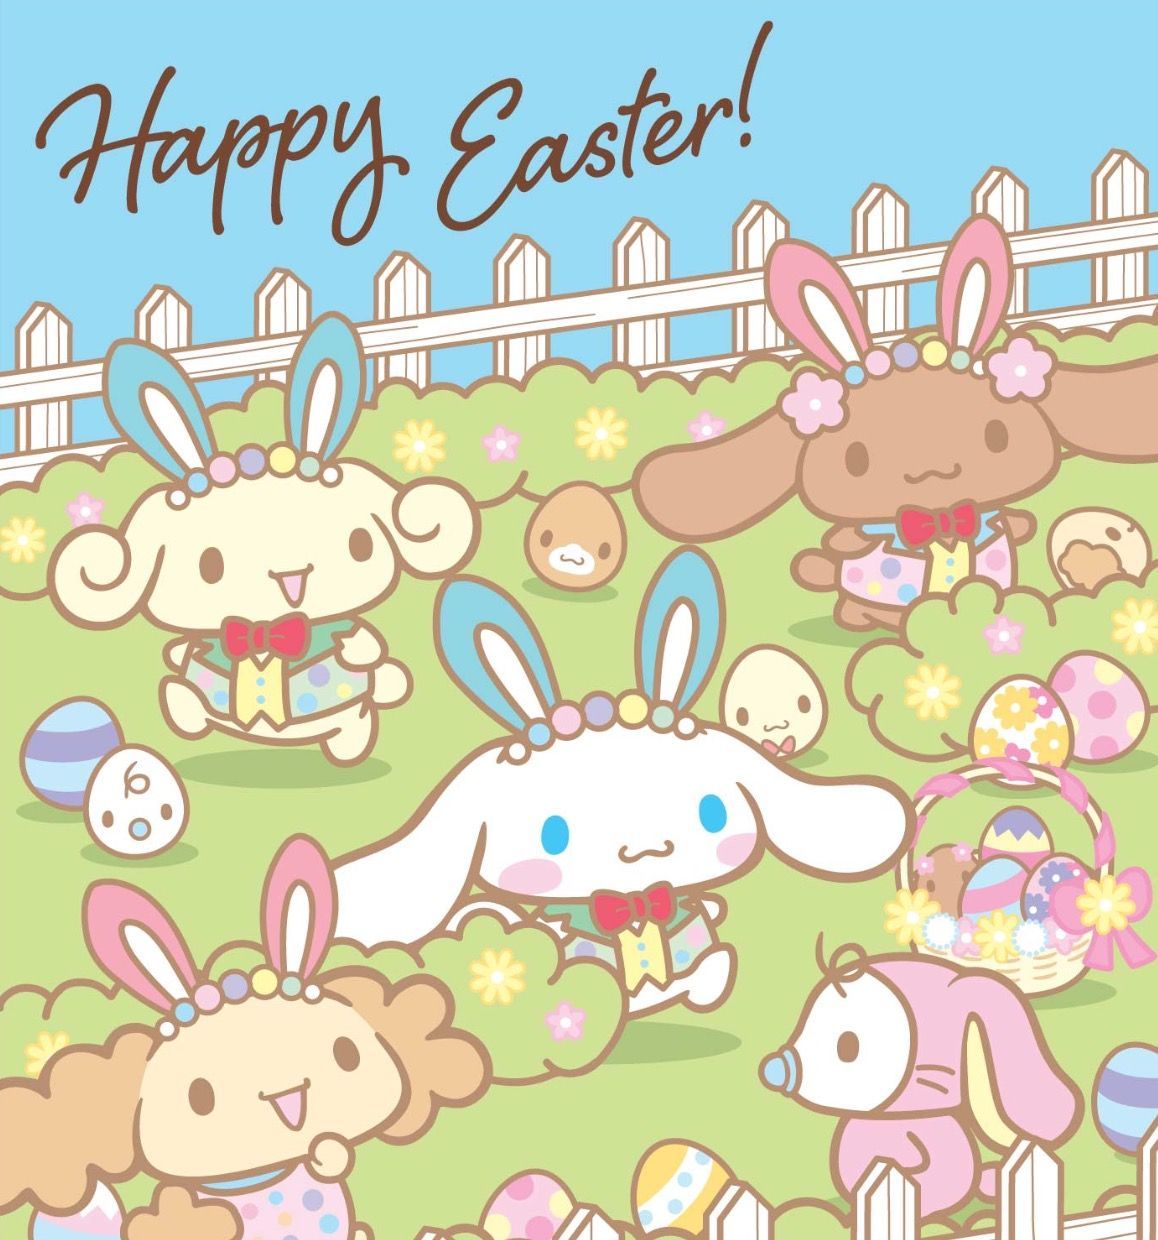 Happy Easter! #Cinnamoroll ٩(๑❛ᴗ❛๑)۶. Cute anime character